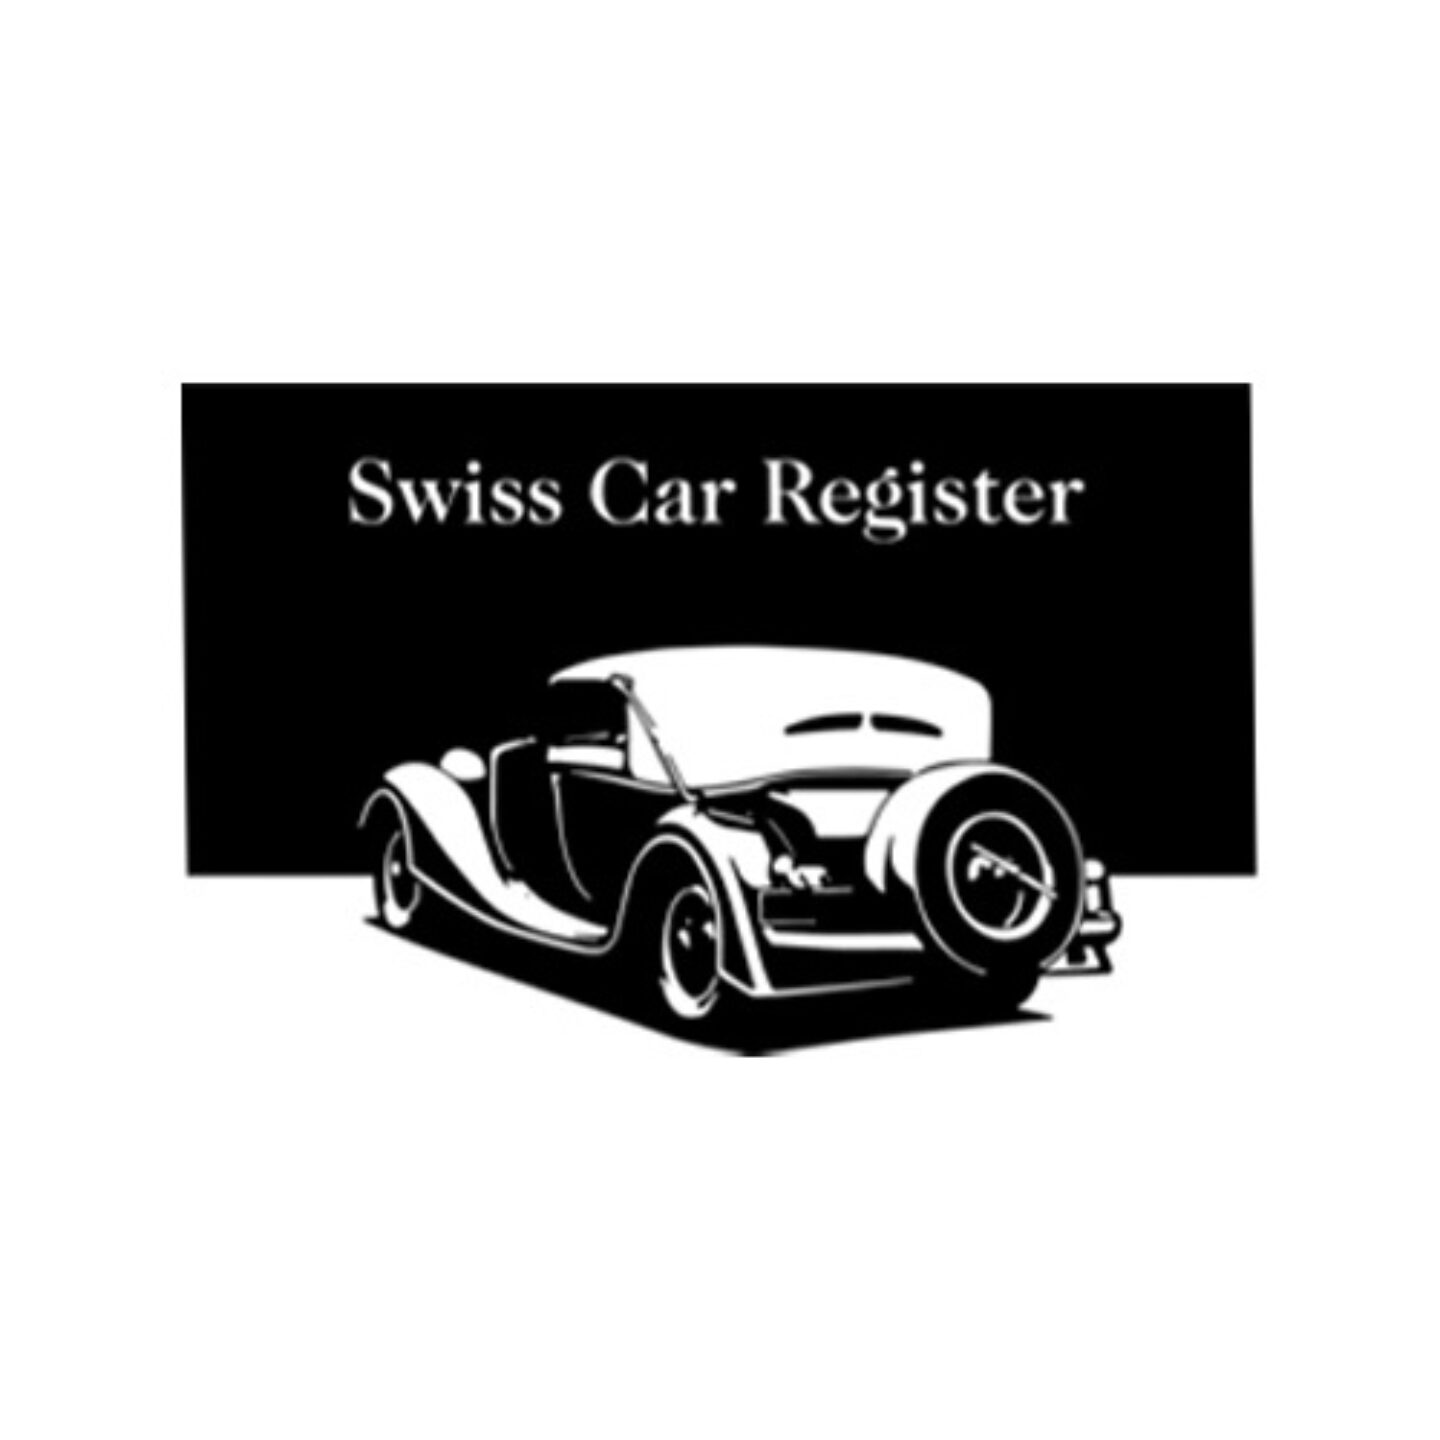 Swiss car register